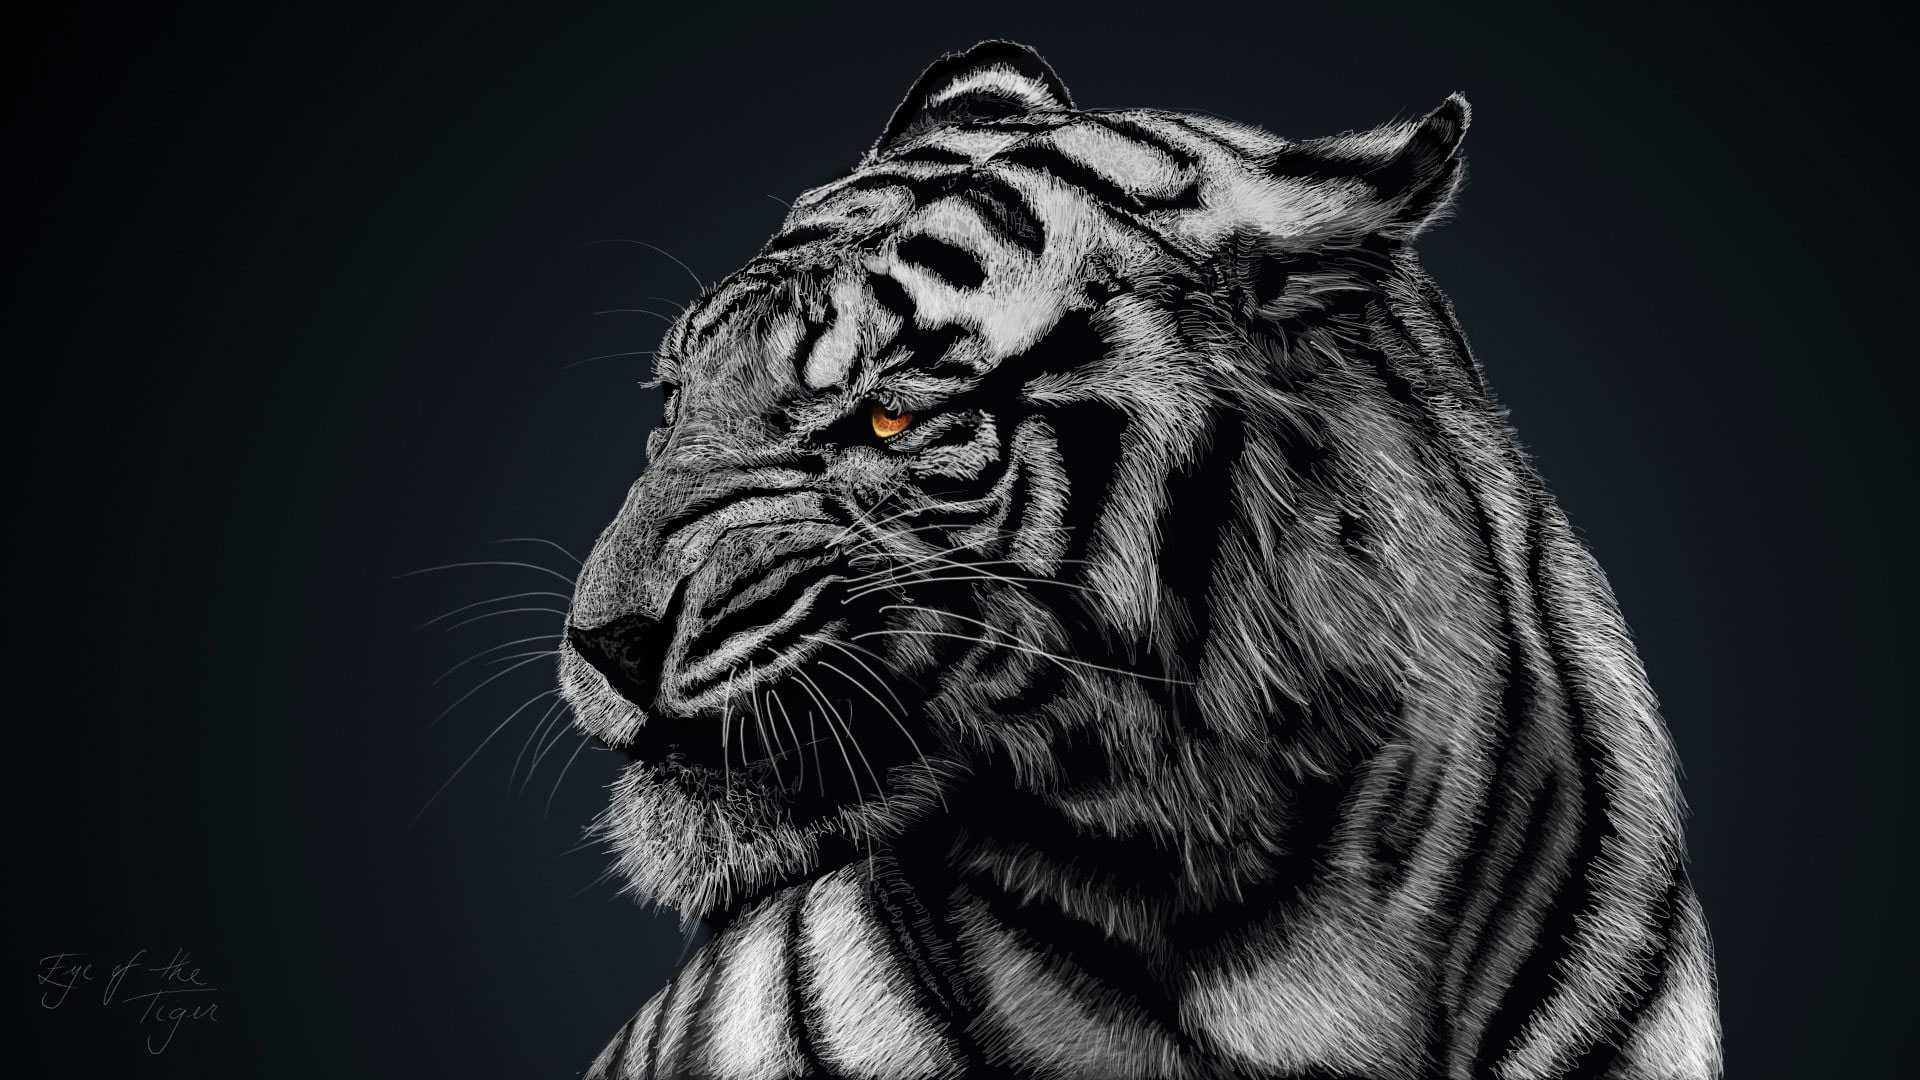 Wallpaper Gray And Black Tiger, Greyscale Photo Of Tiger